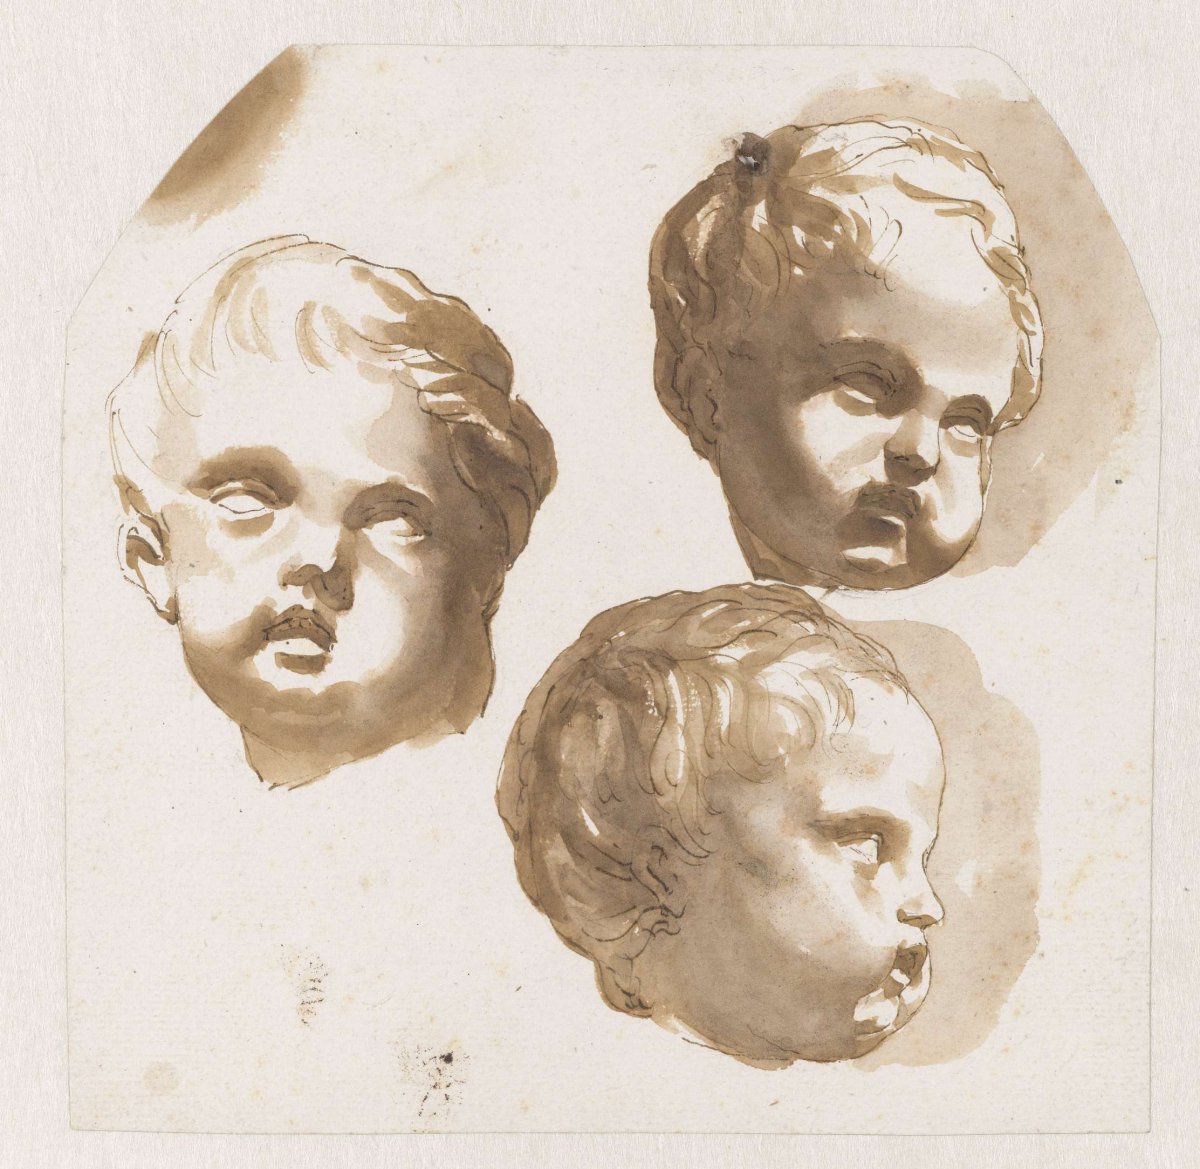 Child's head seen from three sides, Jan de Bisschop, 1648 - 1671